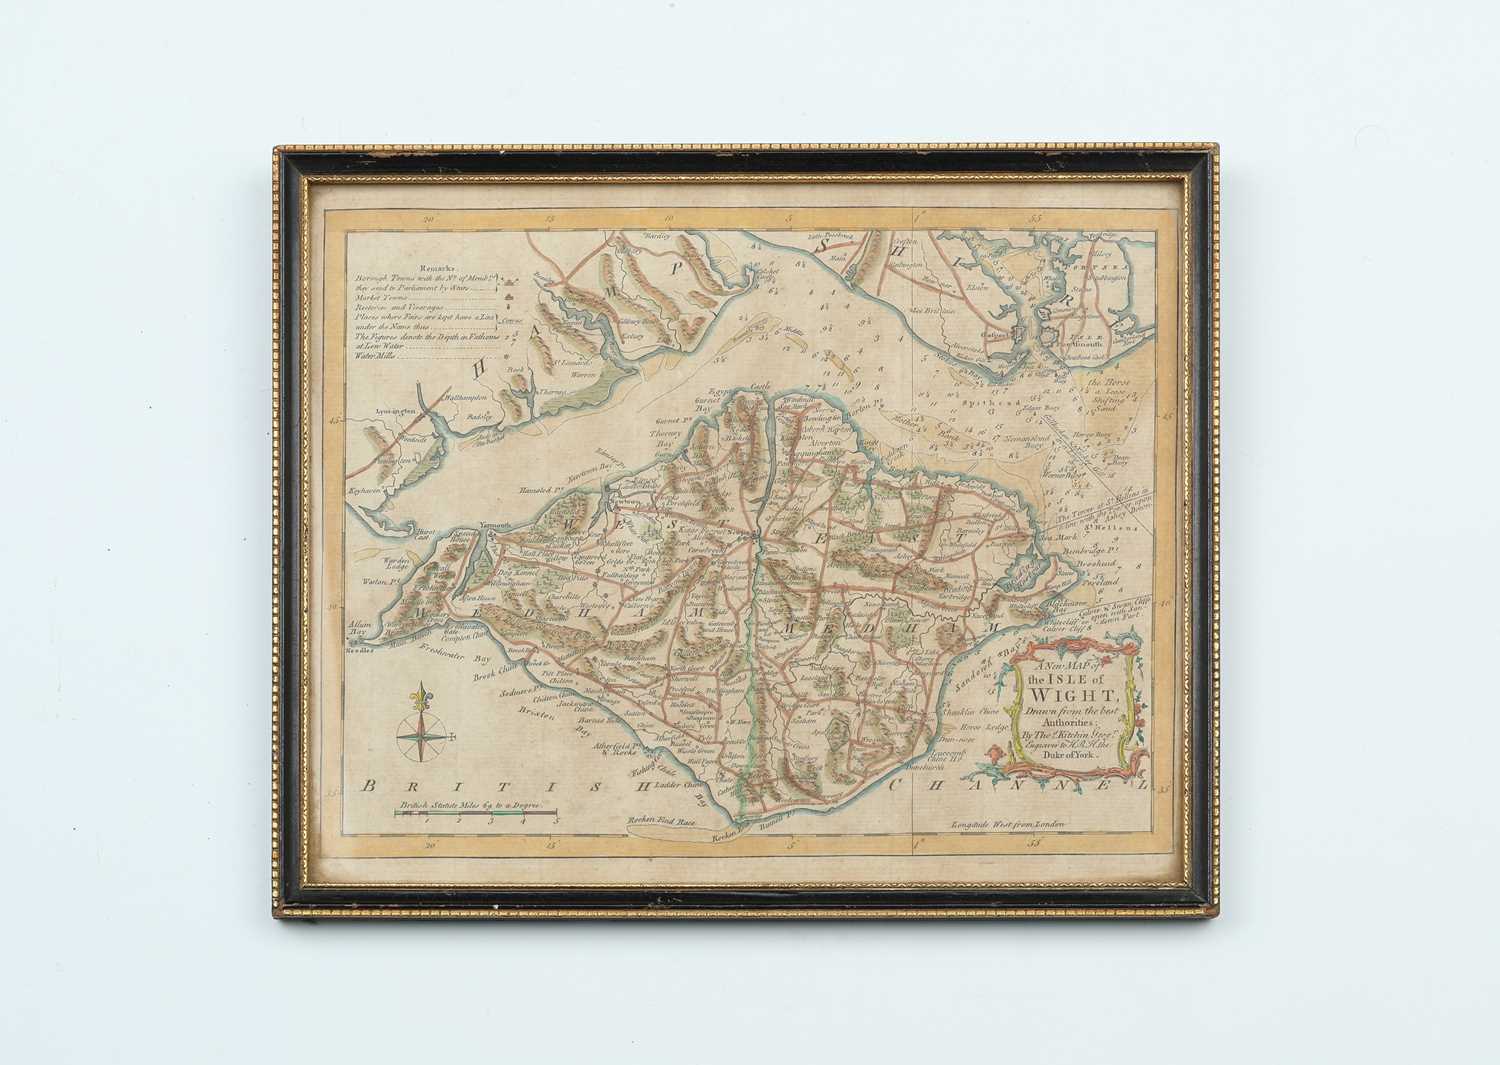 Lot 35 - 18th Century Map